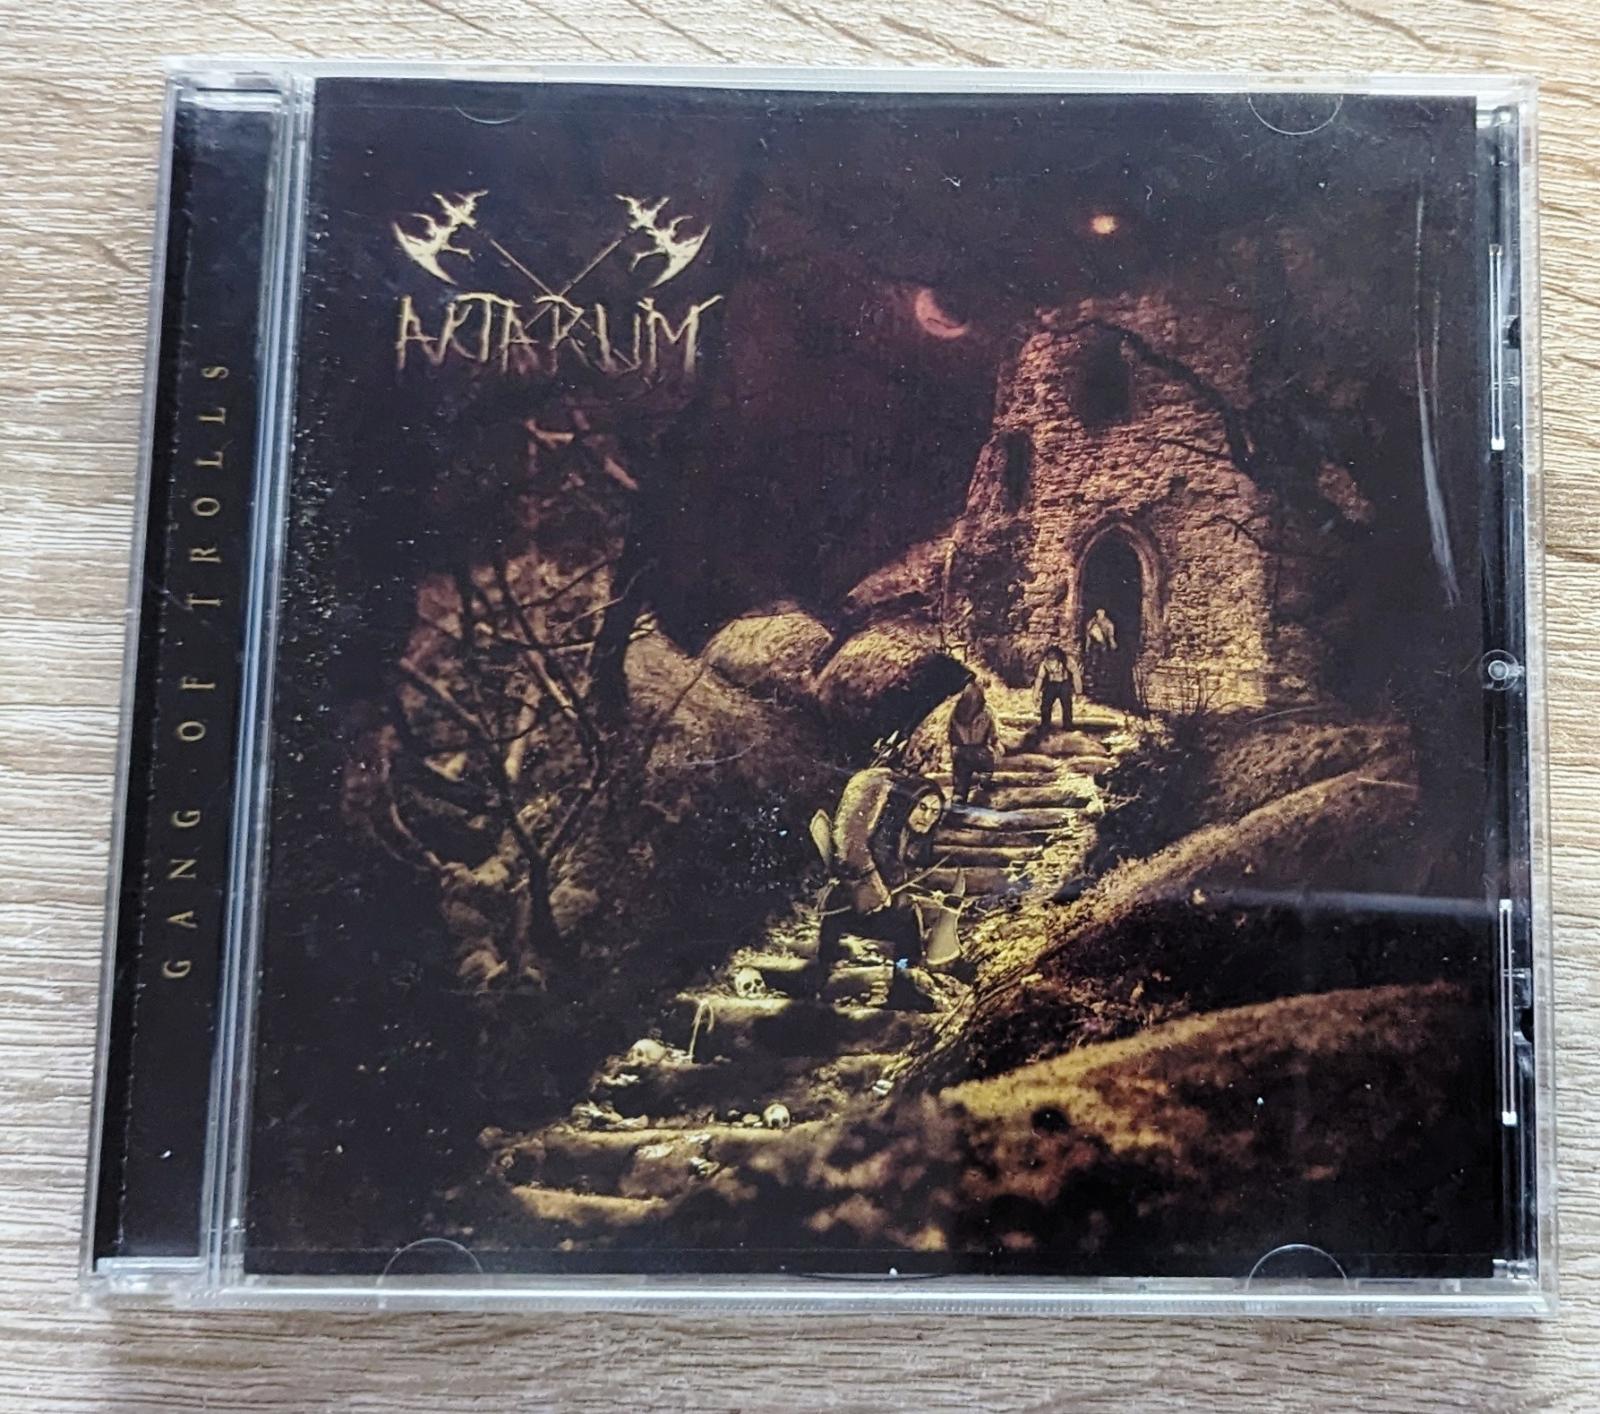 CD Aktarum - Gang of trolls, Belgicko, black/folk metal, 2010 - Hudba na CD